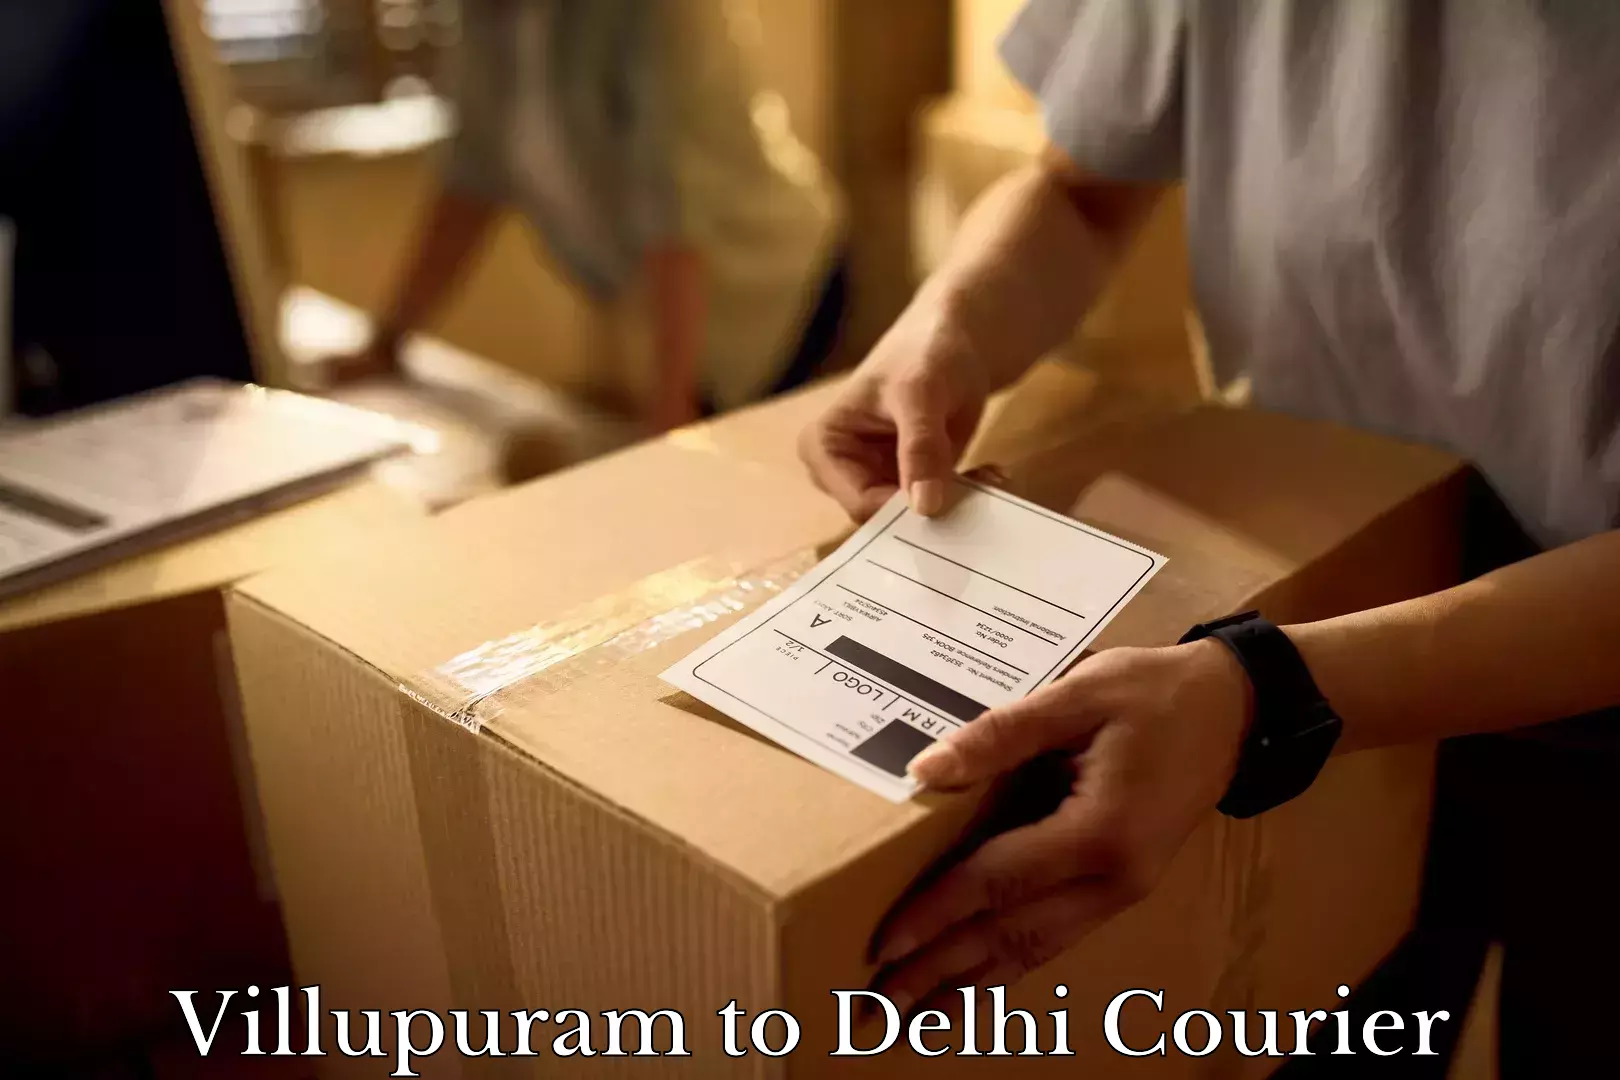 Furniture delivery service Villupuram to East Delhi